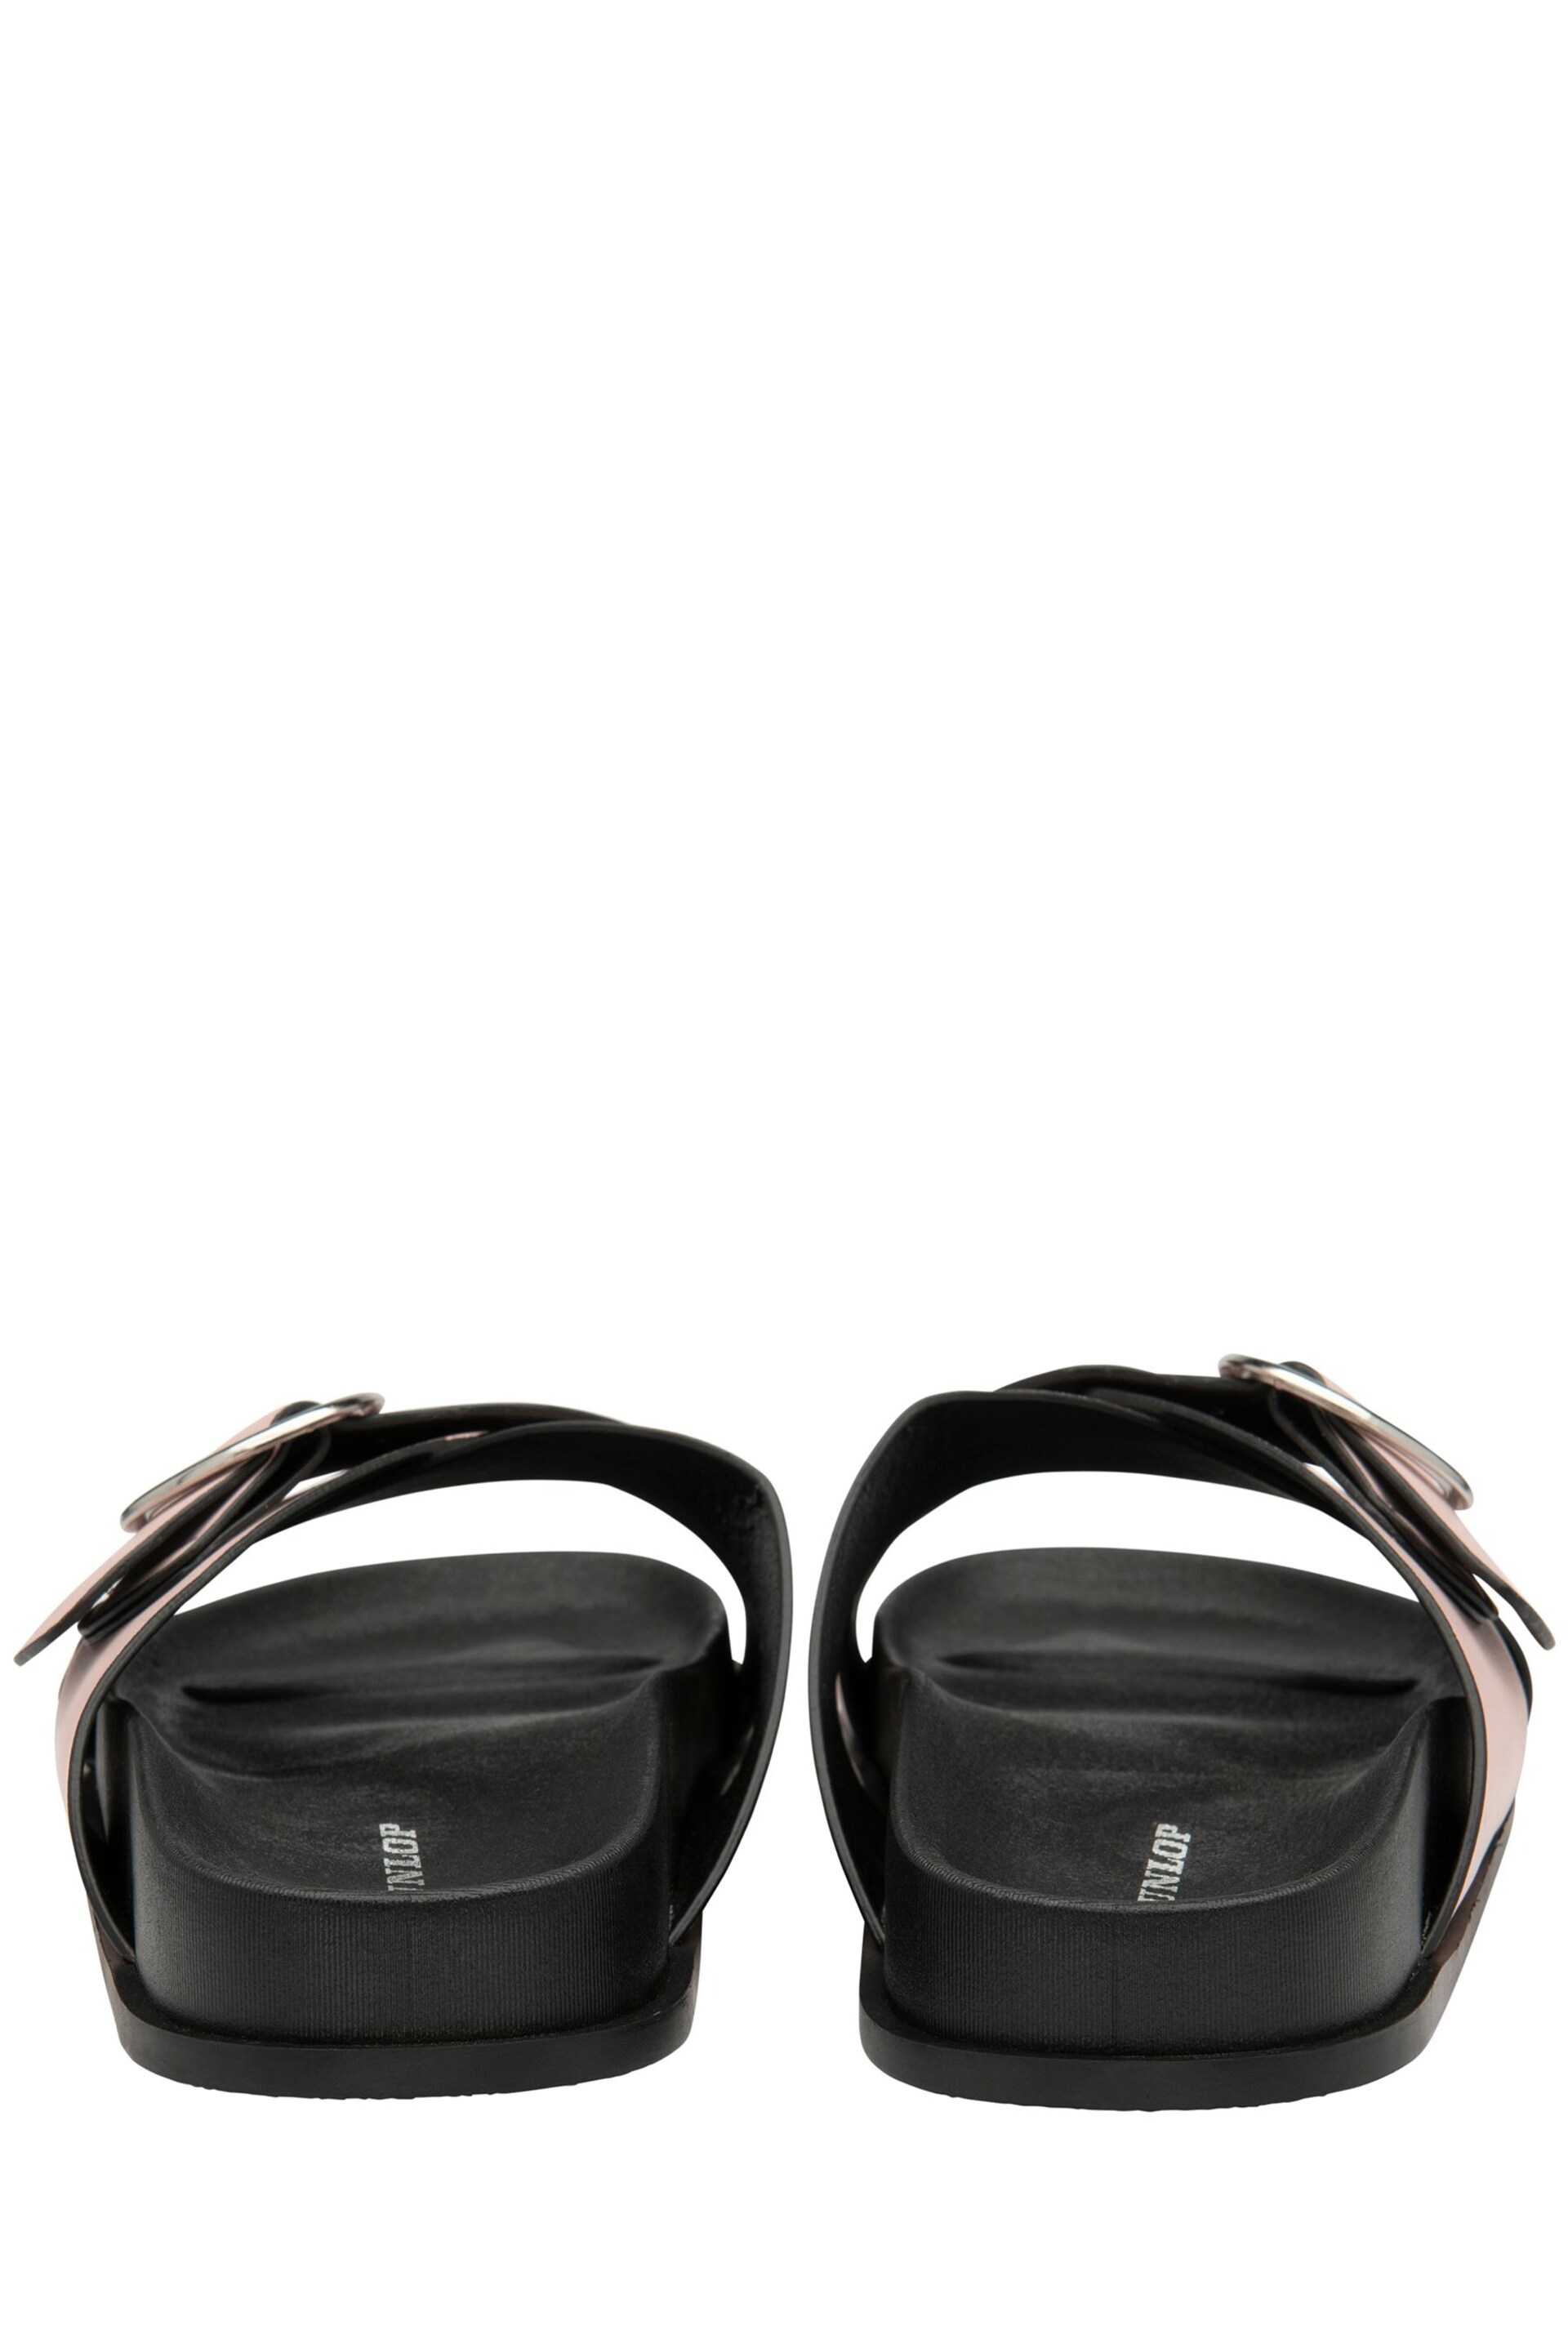 Dunlop Pink Open-Toe Mule Sandals - Image 3 of 4